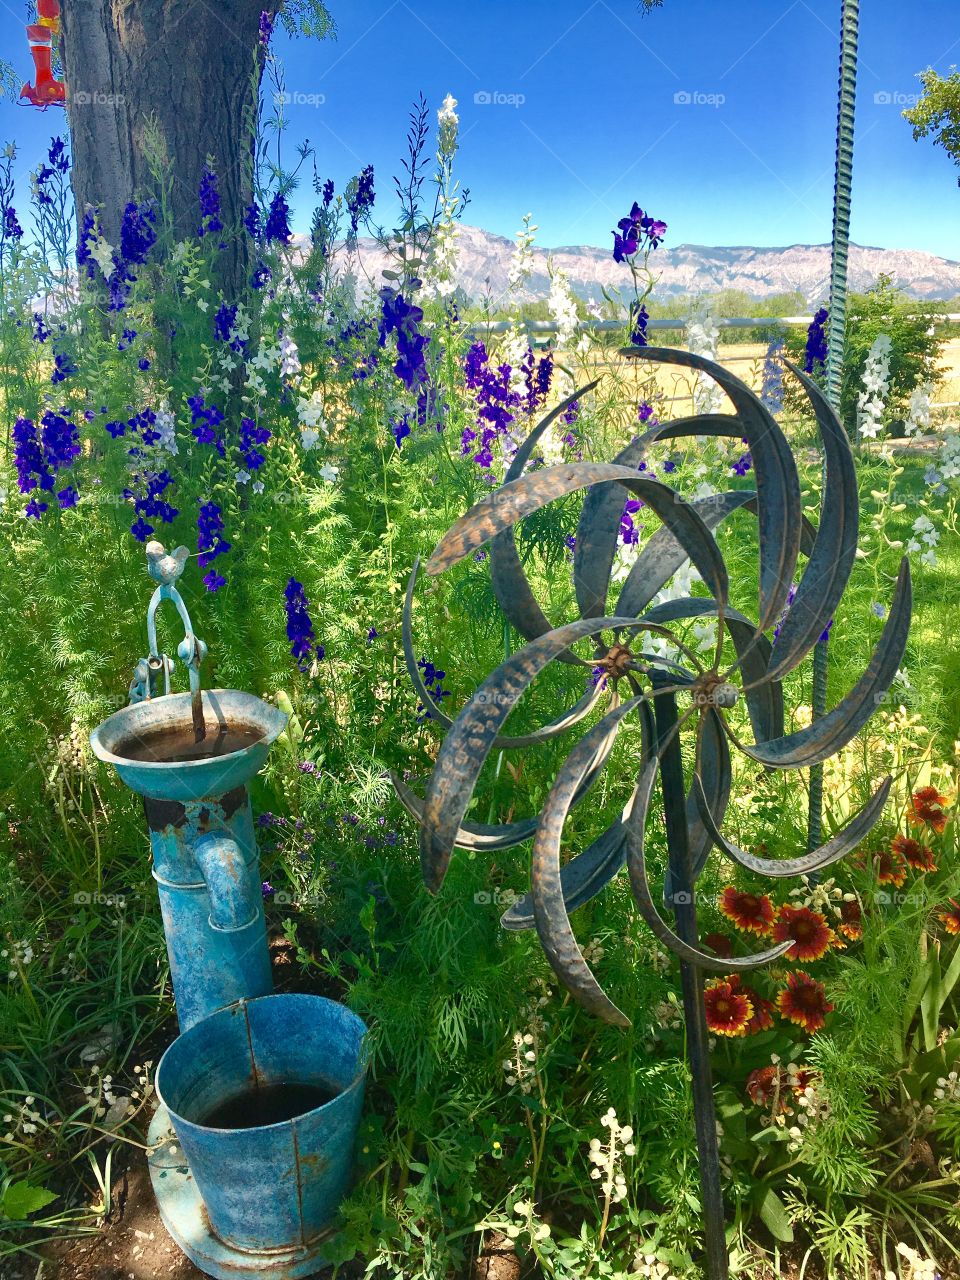 Grandma's flower garden. Birdbath. Coming bird feeder. Windmill. Blue sky. Beautiful wildflowers. Perfect garden. Wonderful view.